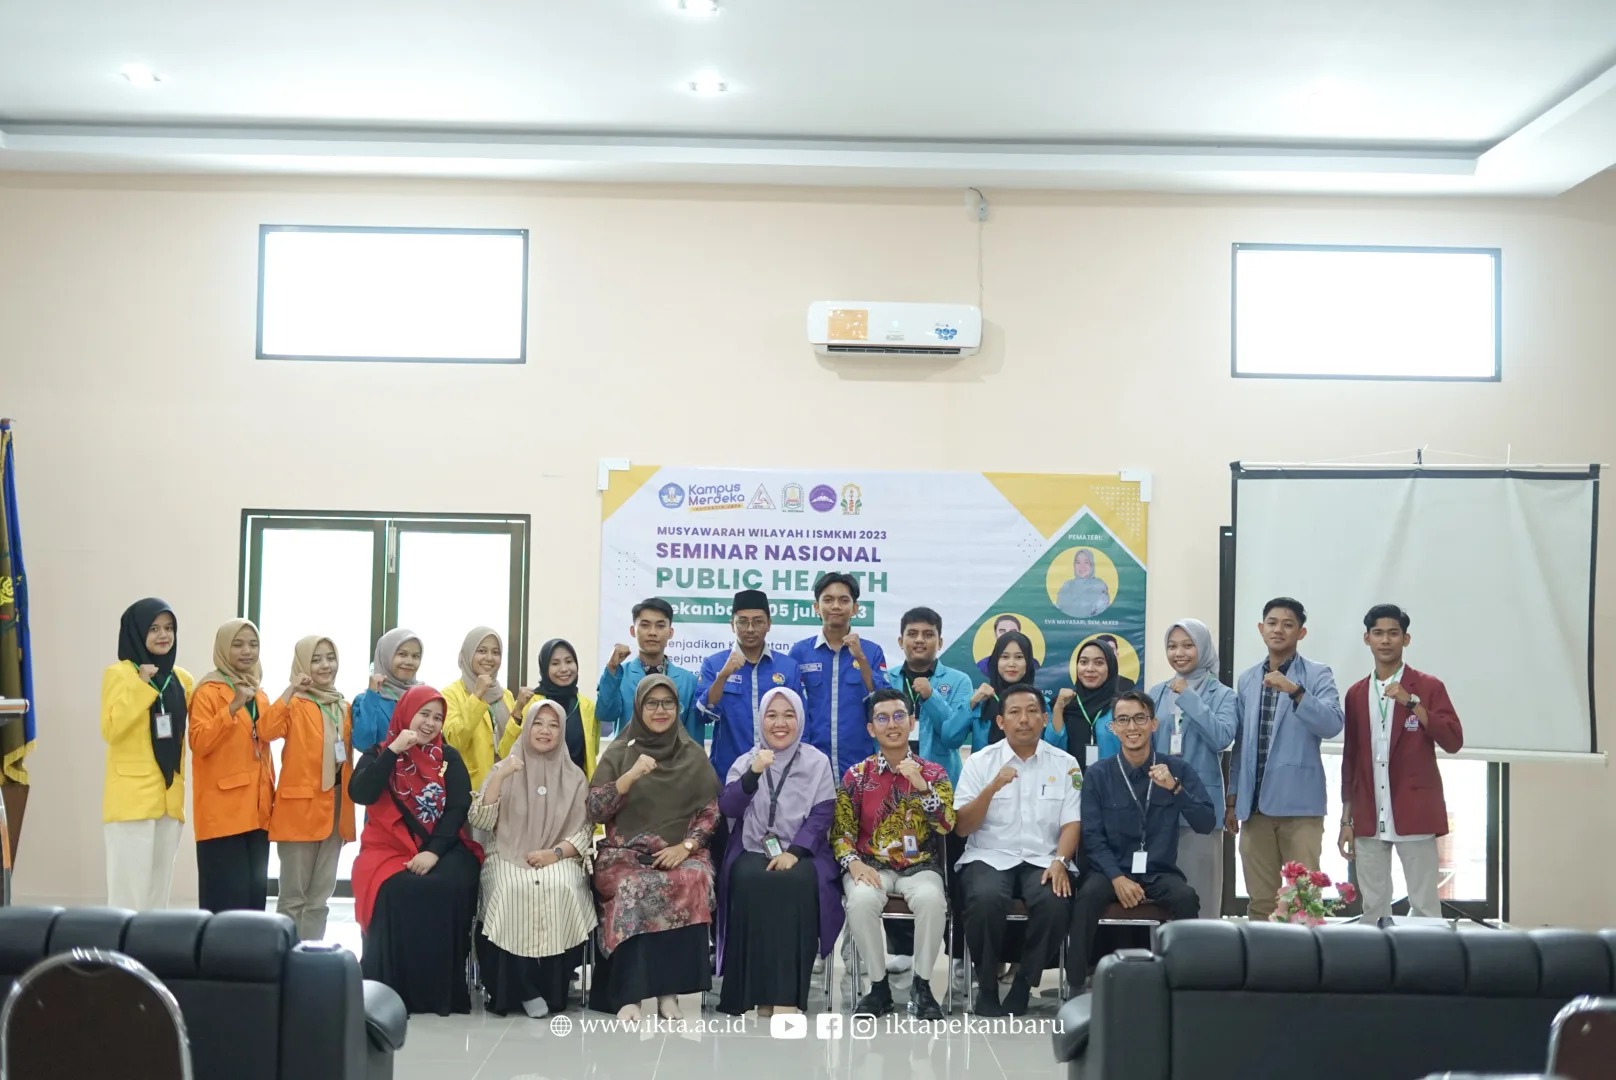 IKTA, Tuan Rumah Musyawarah Wilayah I ISMKMI 2023 dan Seminar Nasional Public Health